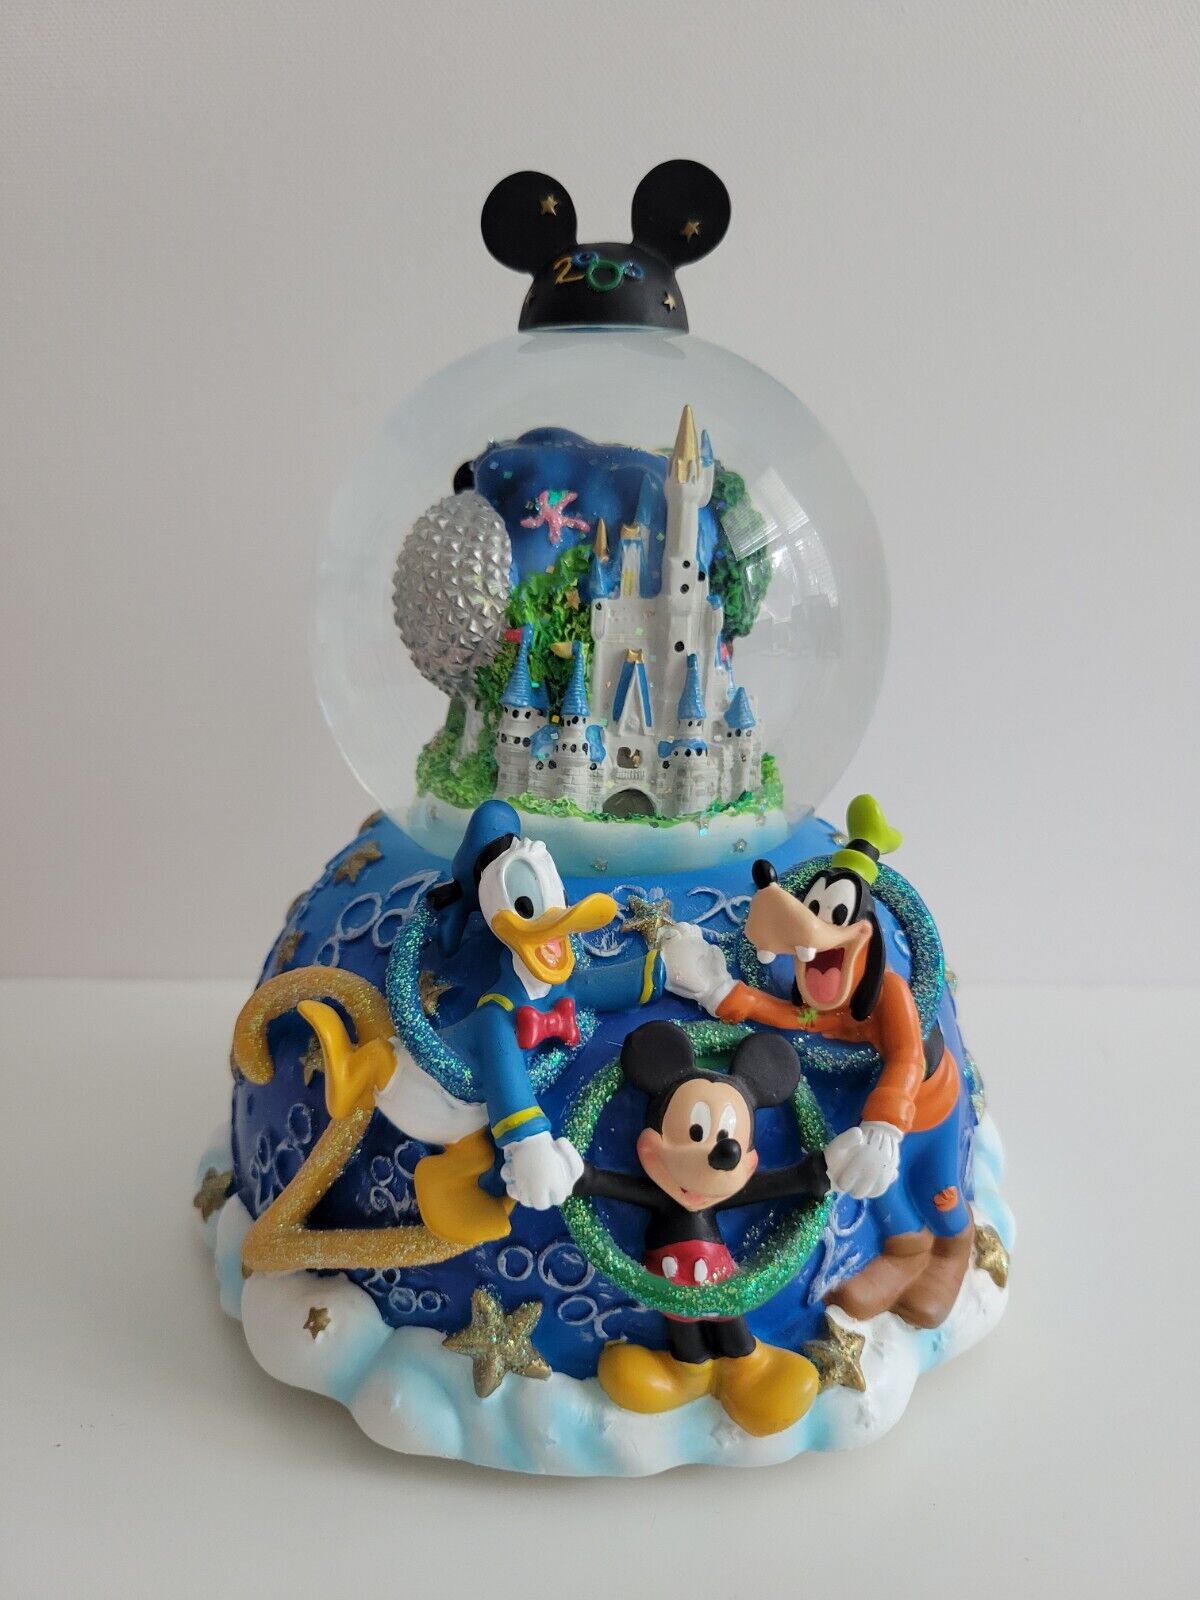 Disney Parks World Celebrate the Future Musical Snow Globe 2000 Mickey Topper